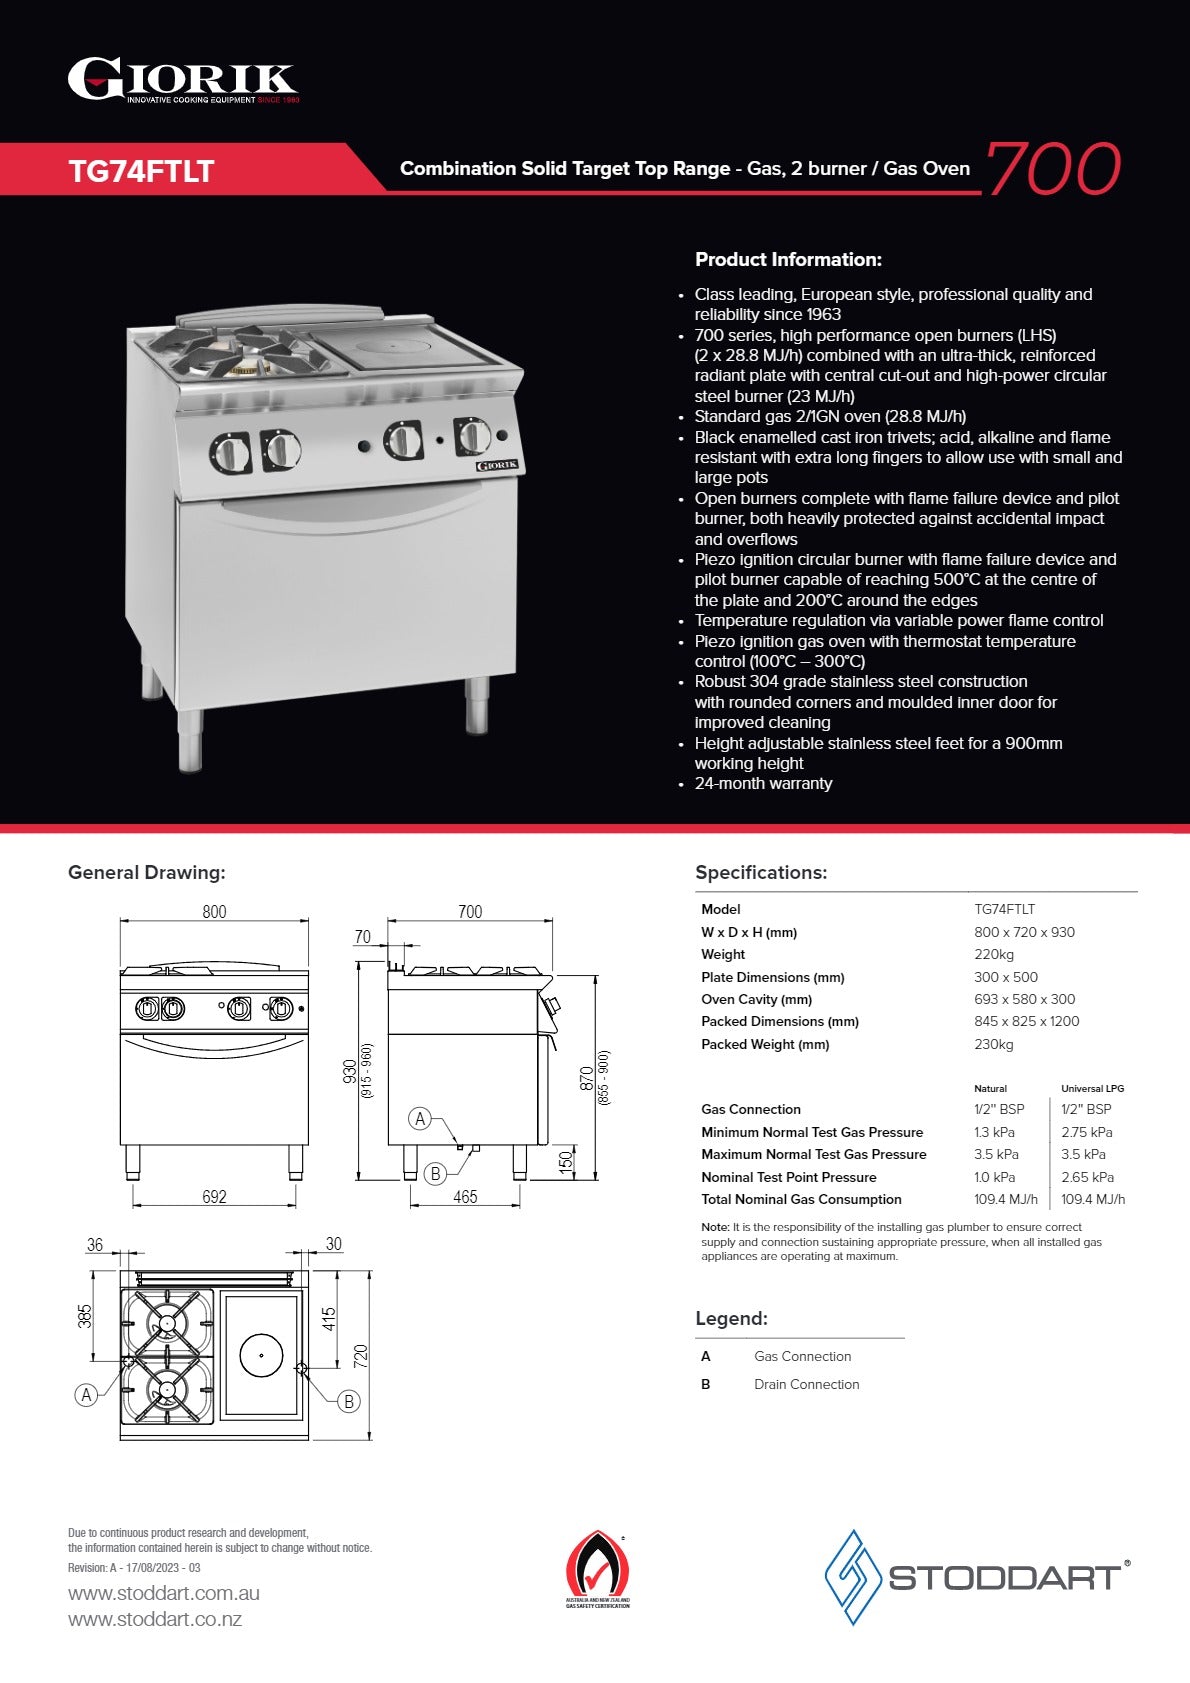 Thumbnail - Giorik 700 Series TG74FTLT - Range Oven